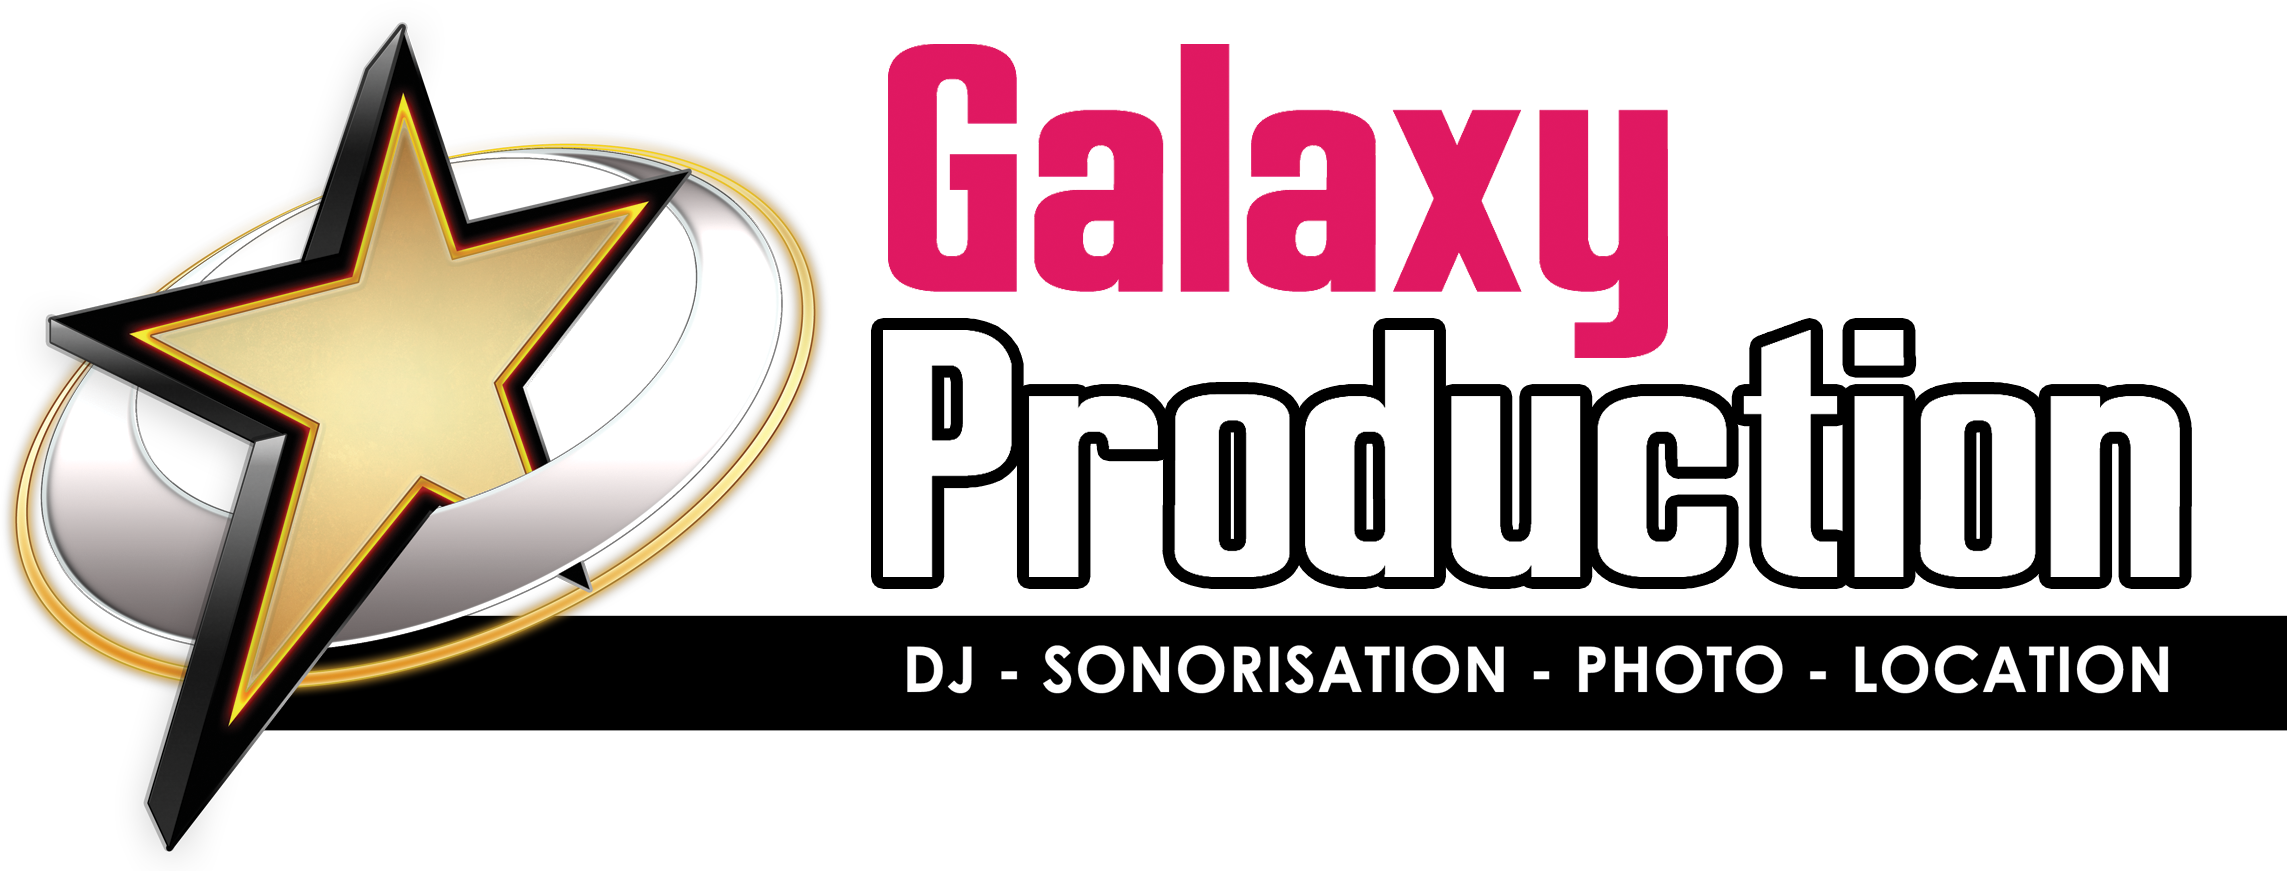 Galaxy production